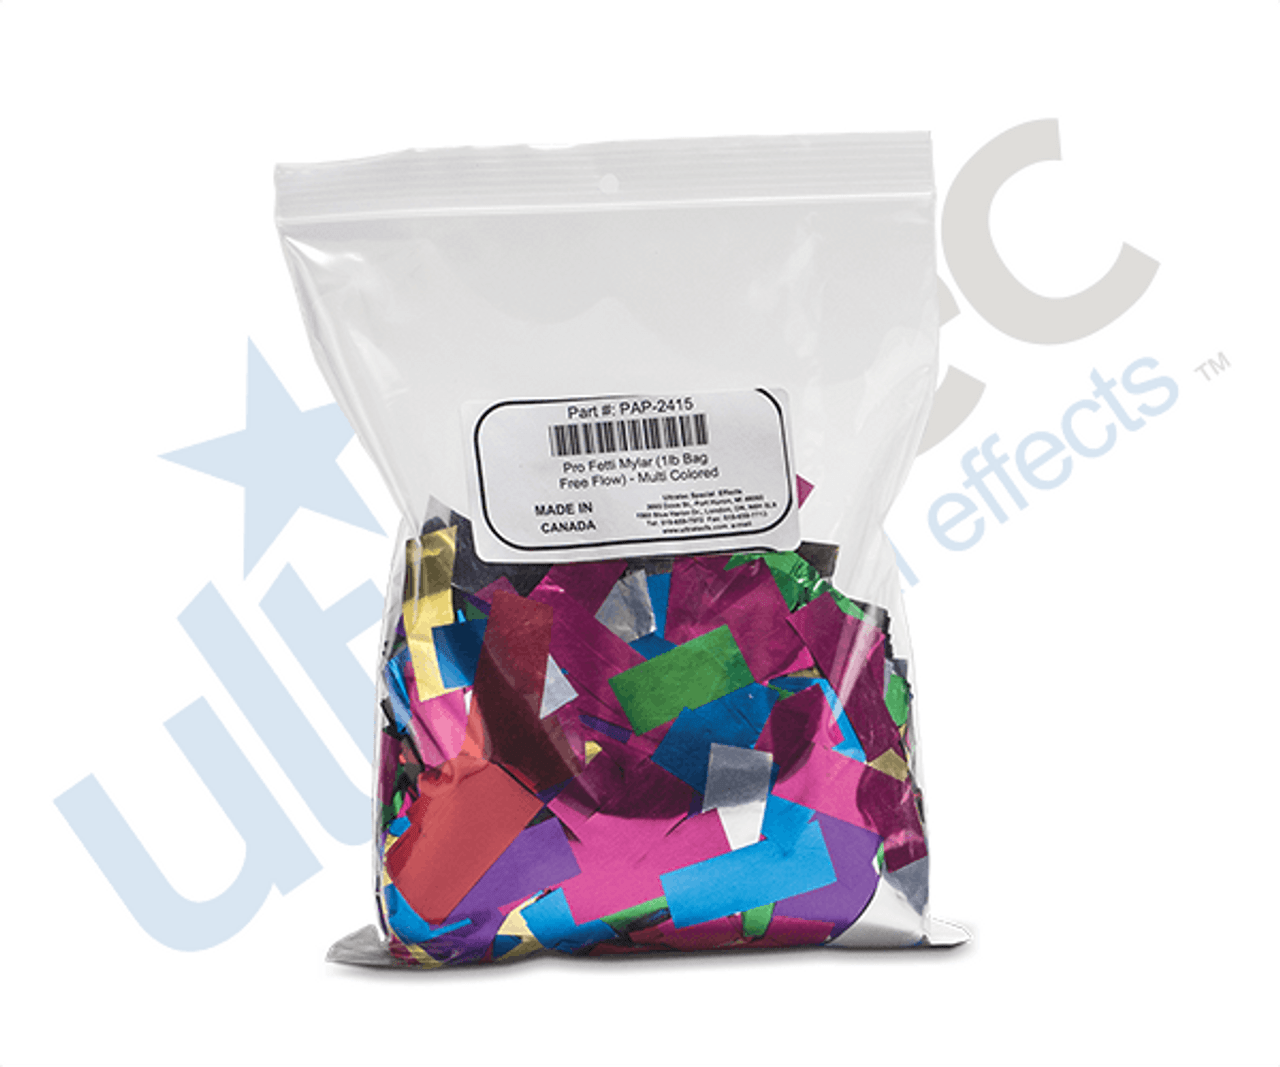 Grand Majestic FX Pro Fetti (10lb bag of free floating Mylar confetti)